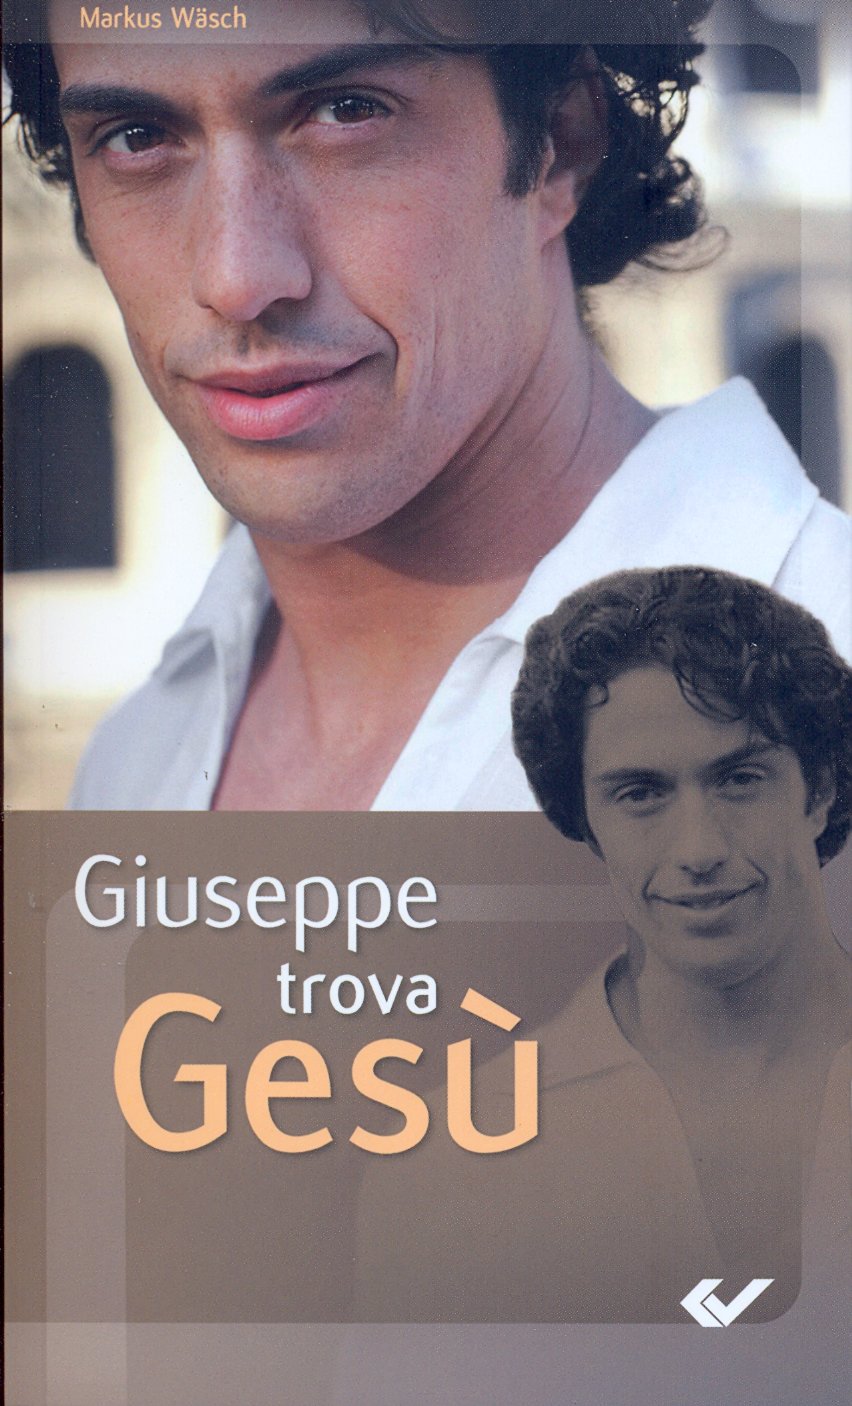 Giuseppe trova Gesù (italien, Giuseppe findet Jesus)